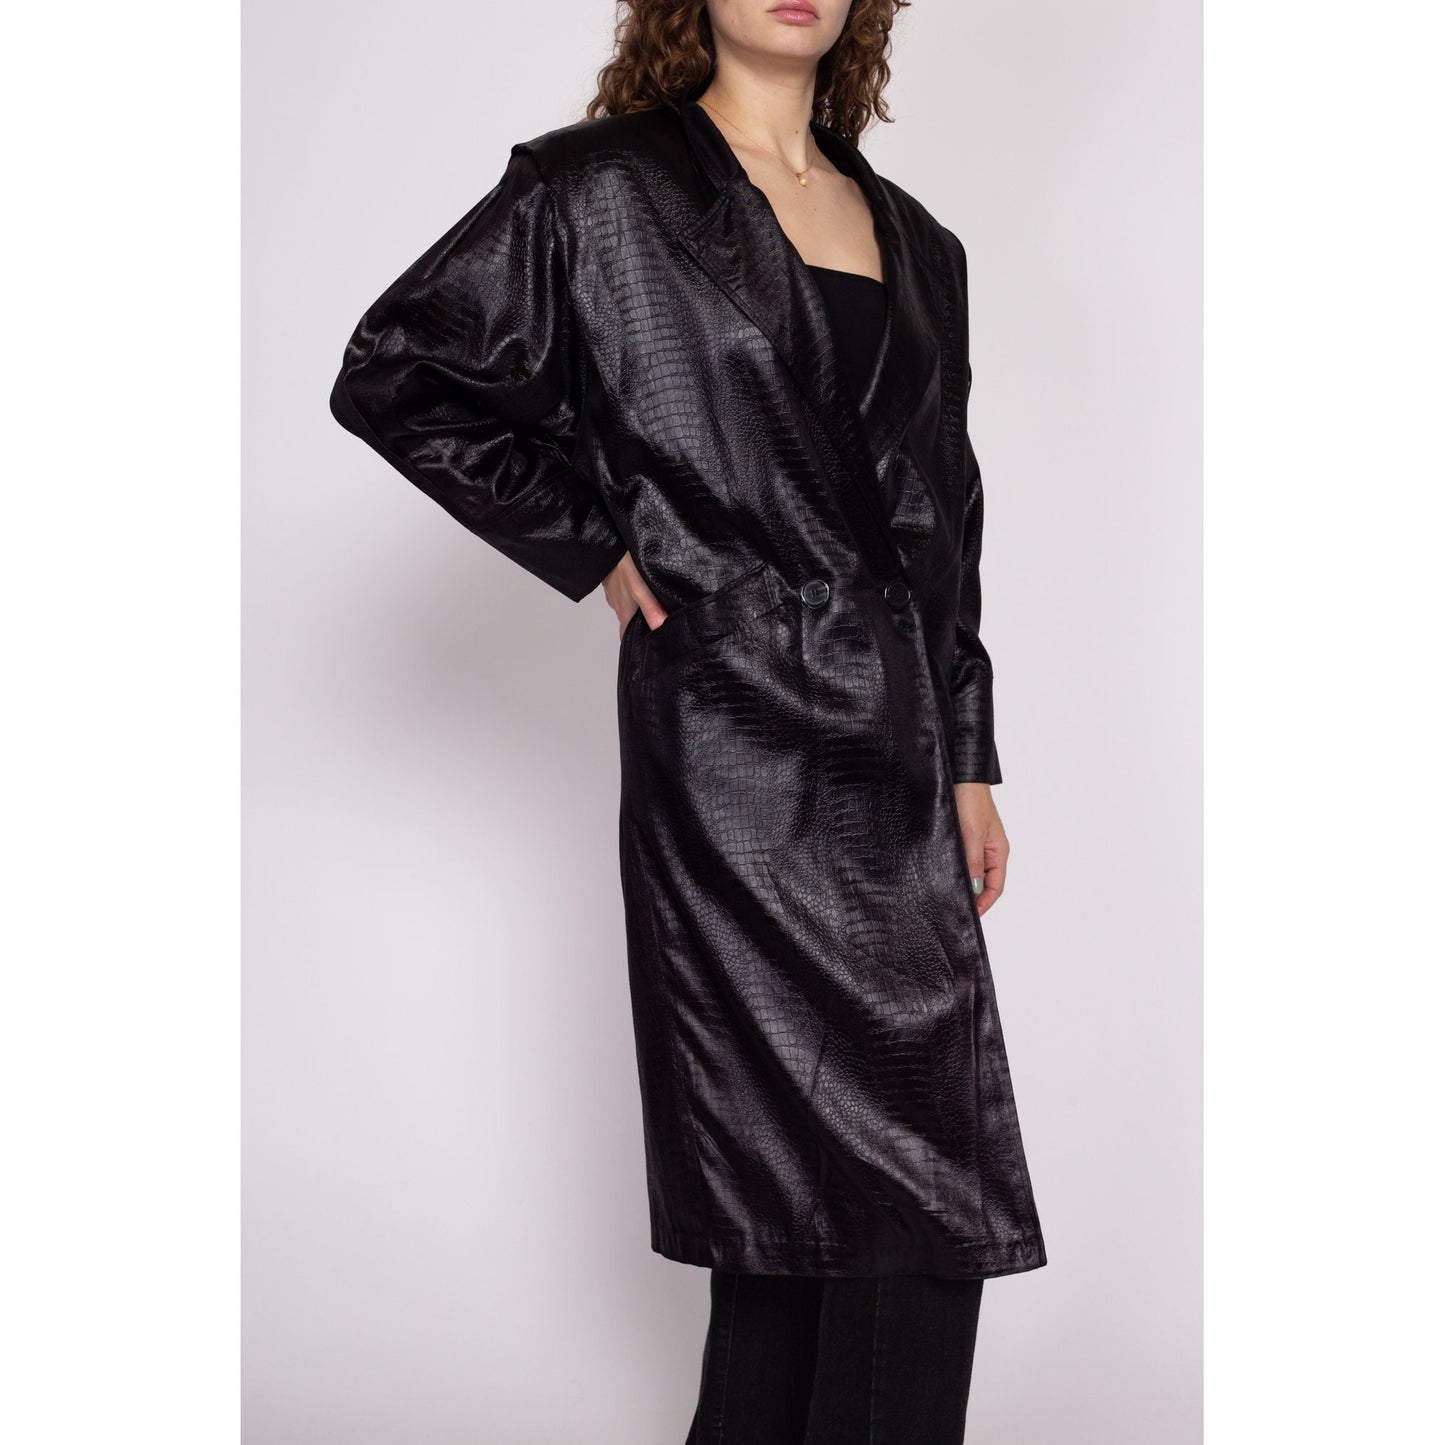 M| 80s Black Faux Crocodile Trench Coat - Medium | Vintage Wet Look Alligator Shiny Long Double Breasted Jacket